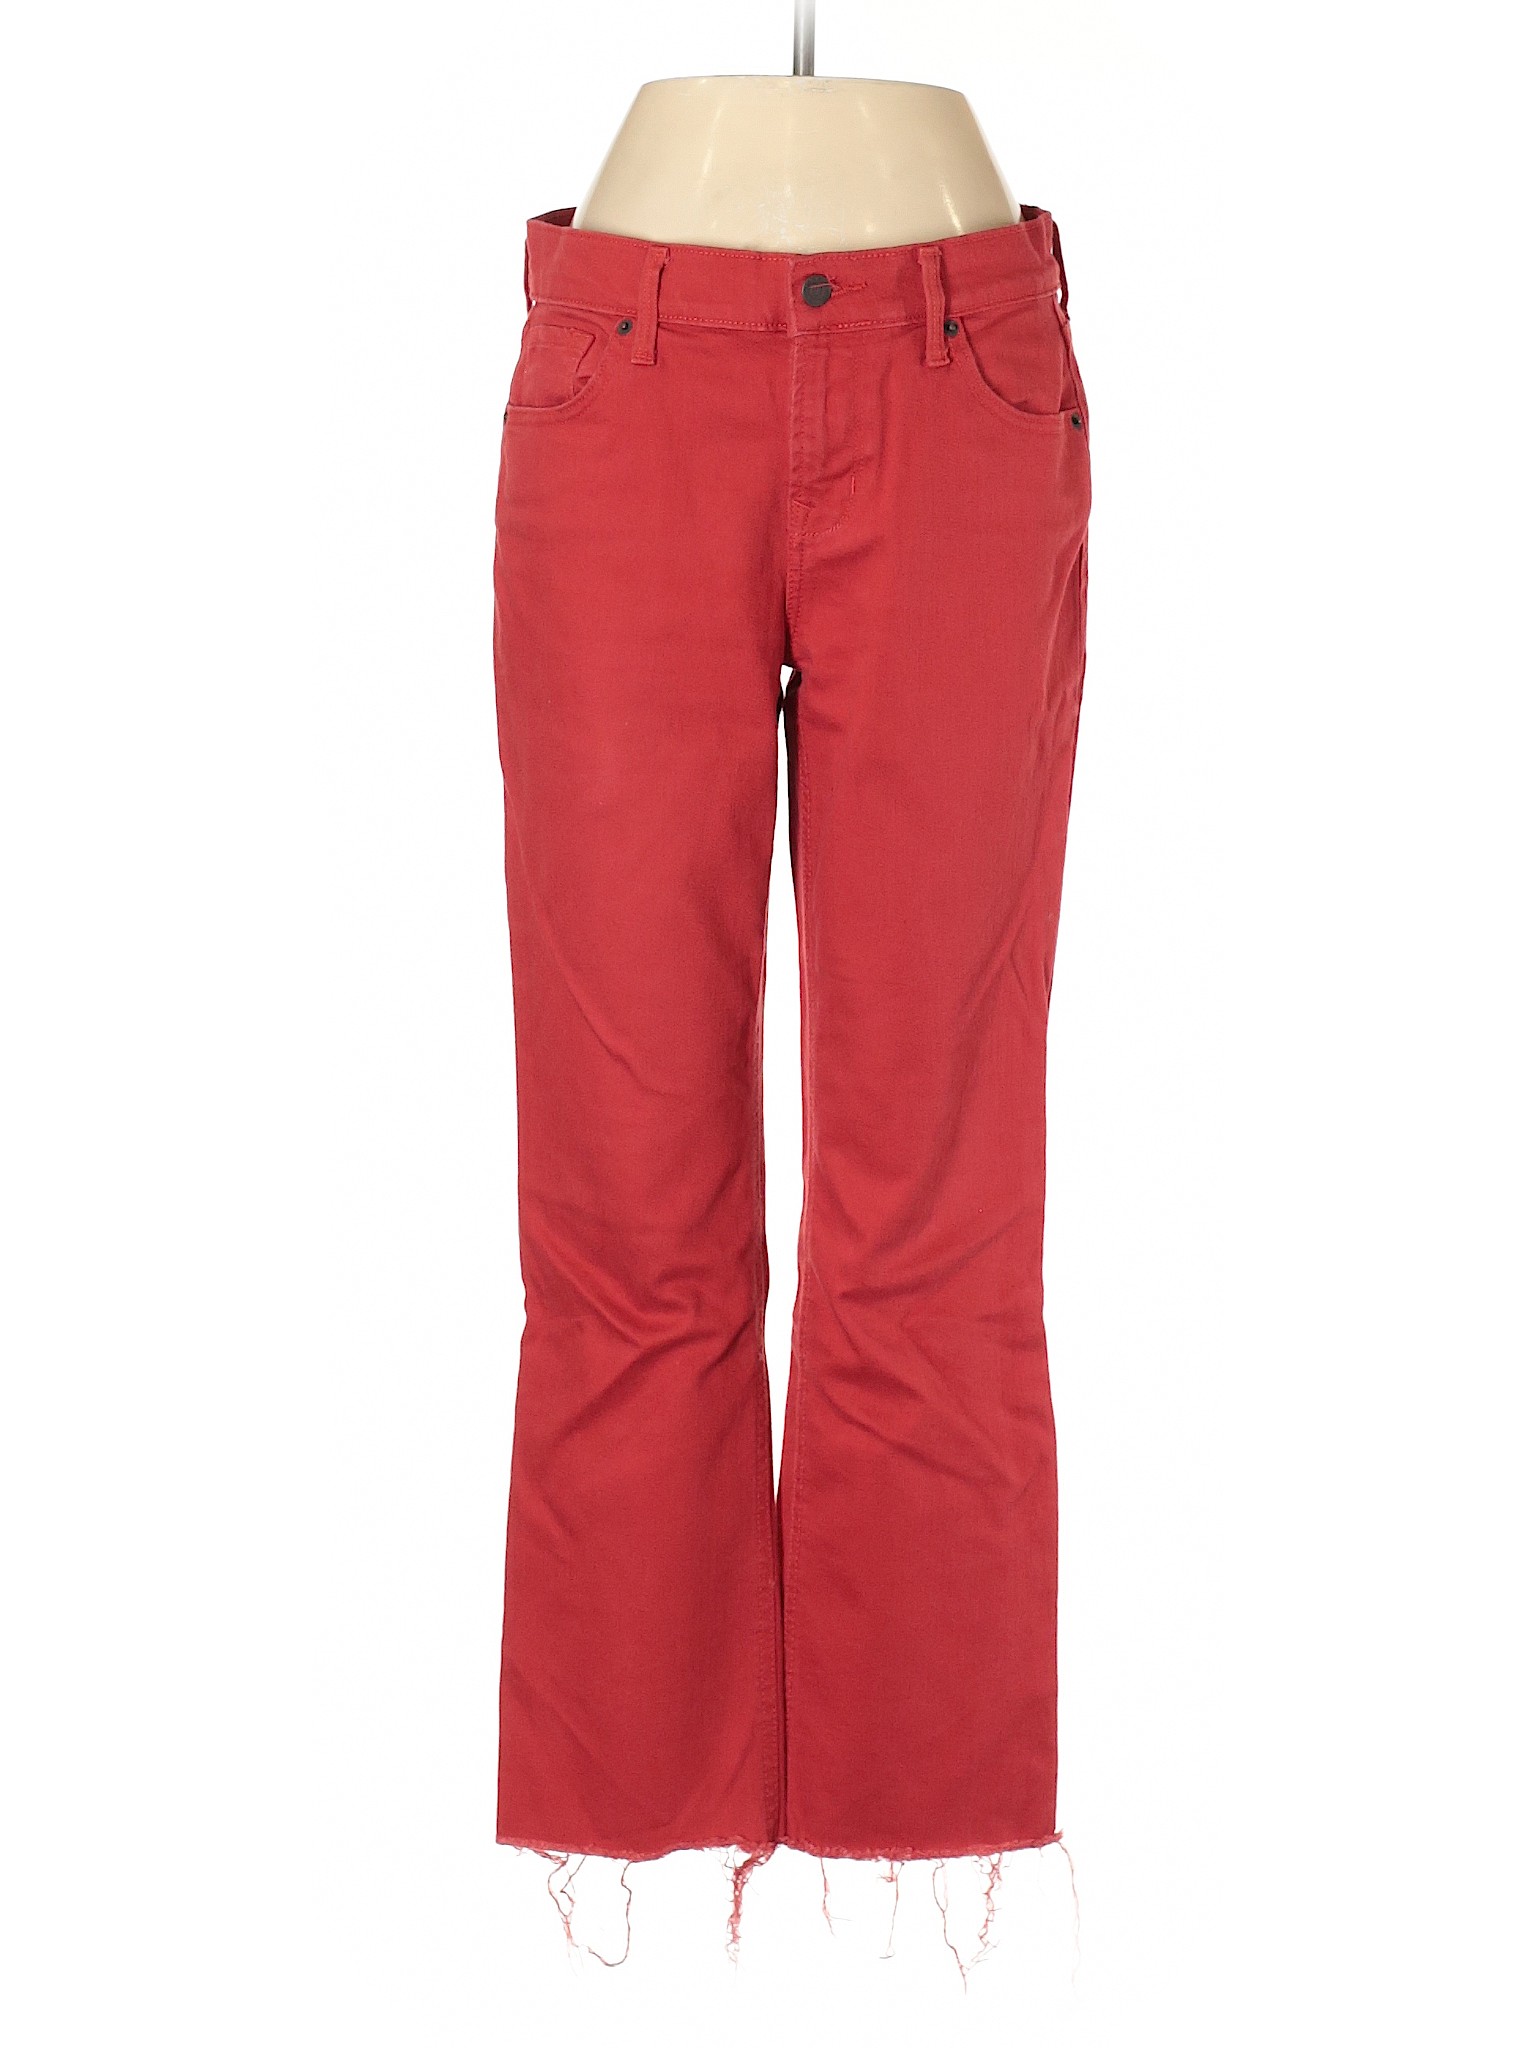 Old Navy Women Red Jeans 2 | eBay